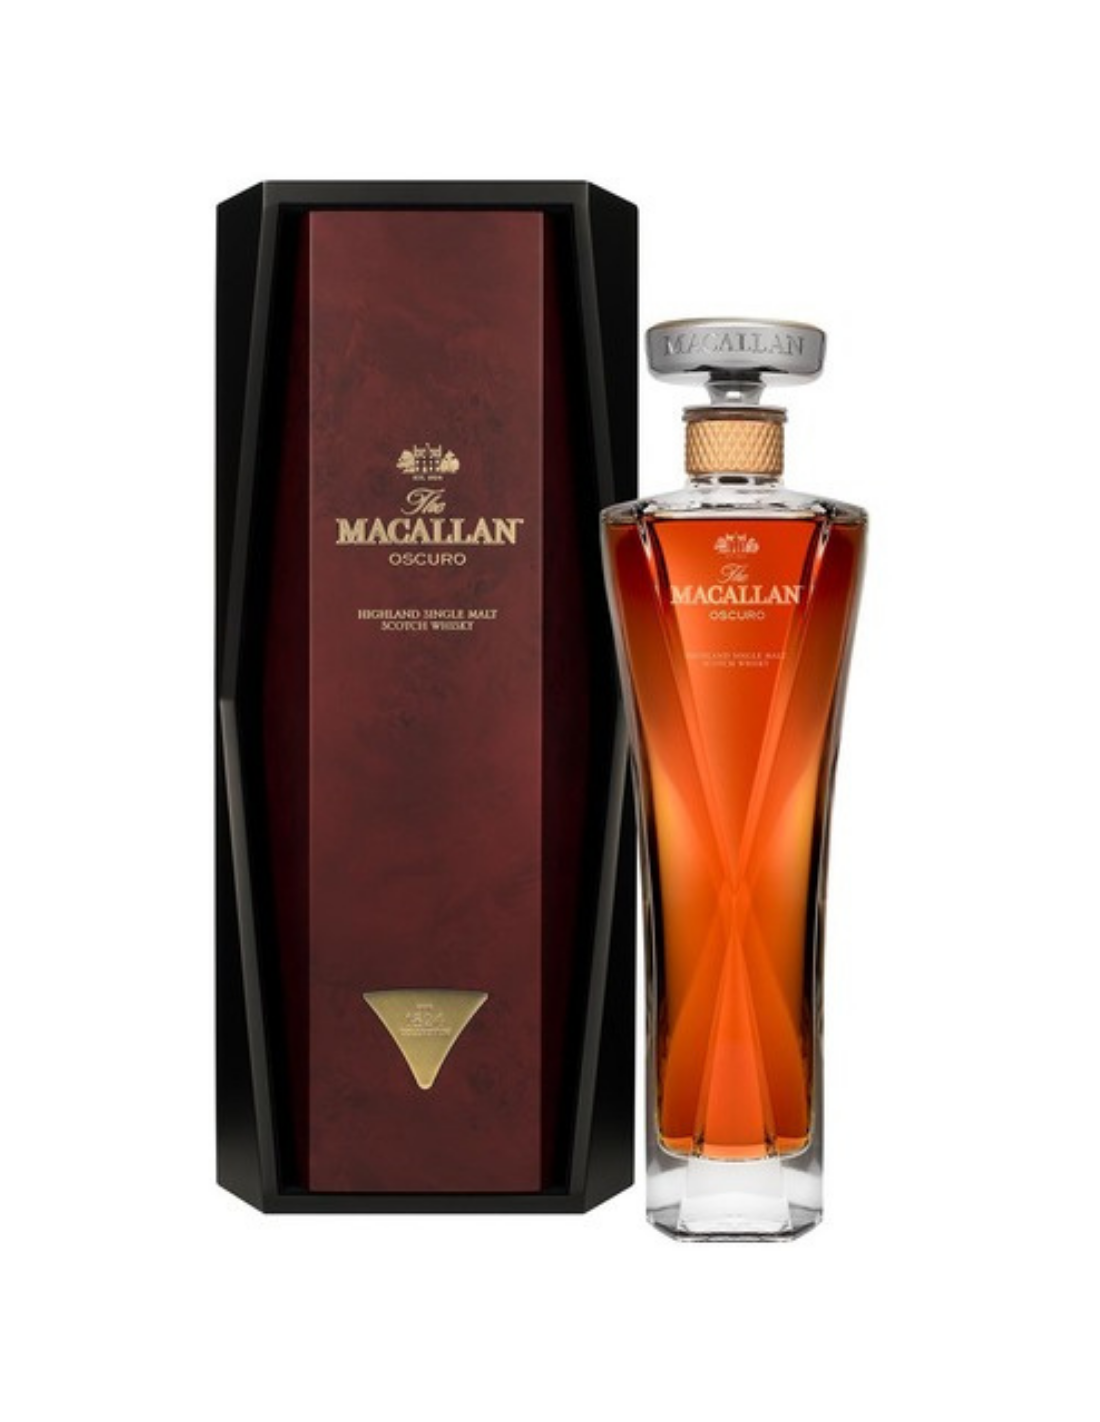 Whisky The Macallan Oscuro Single Malt Scotch, 0.7L, 46.5% alc., Scotia alcooldiscount.ro